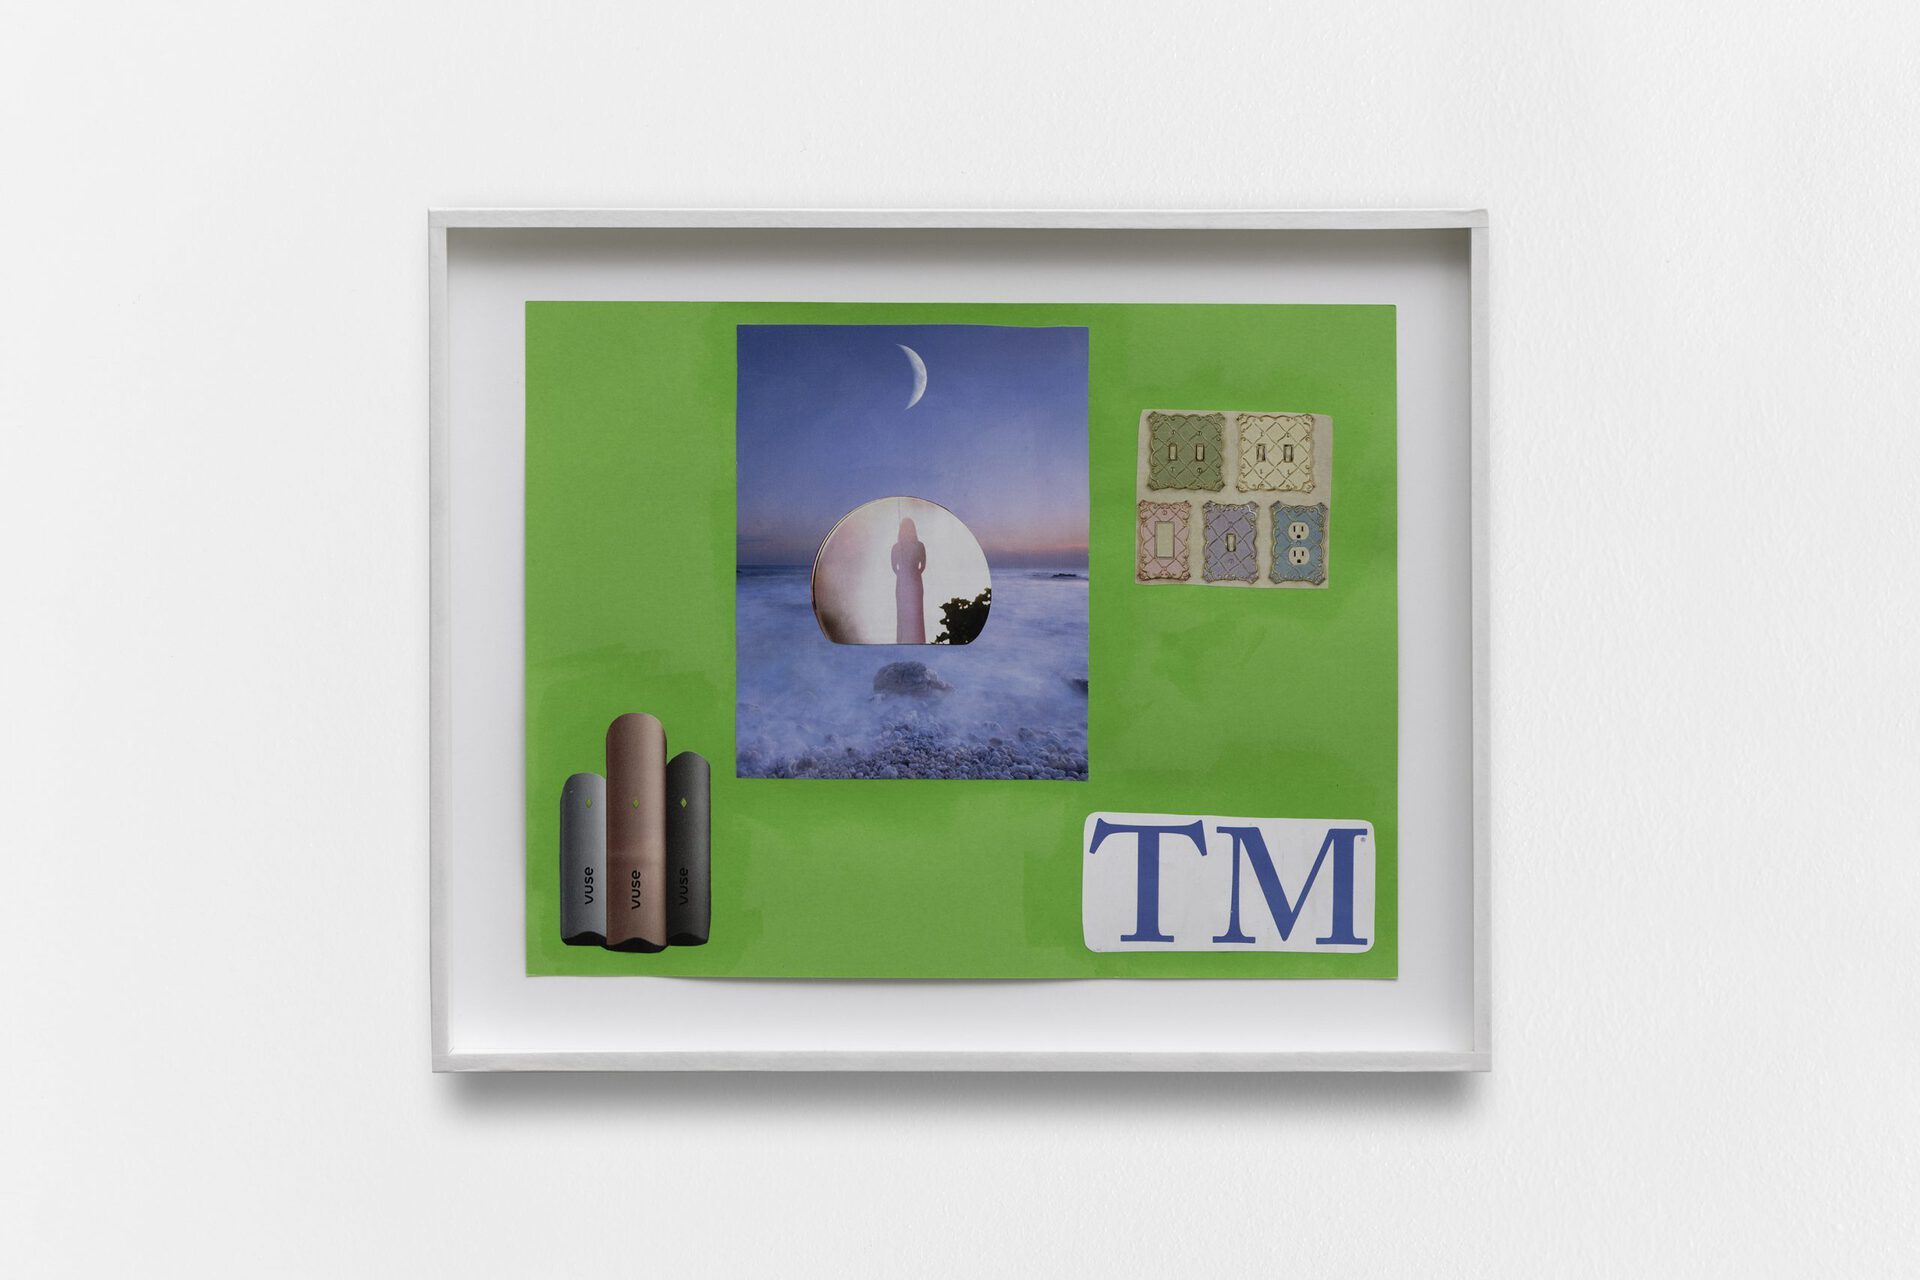 Shana Moulton, TM, 2020, collage on paper, 21,5 × 28 cm